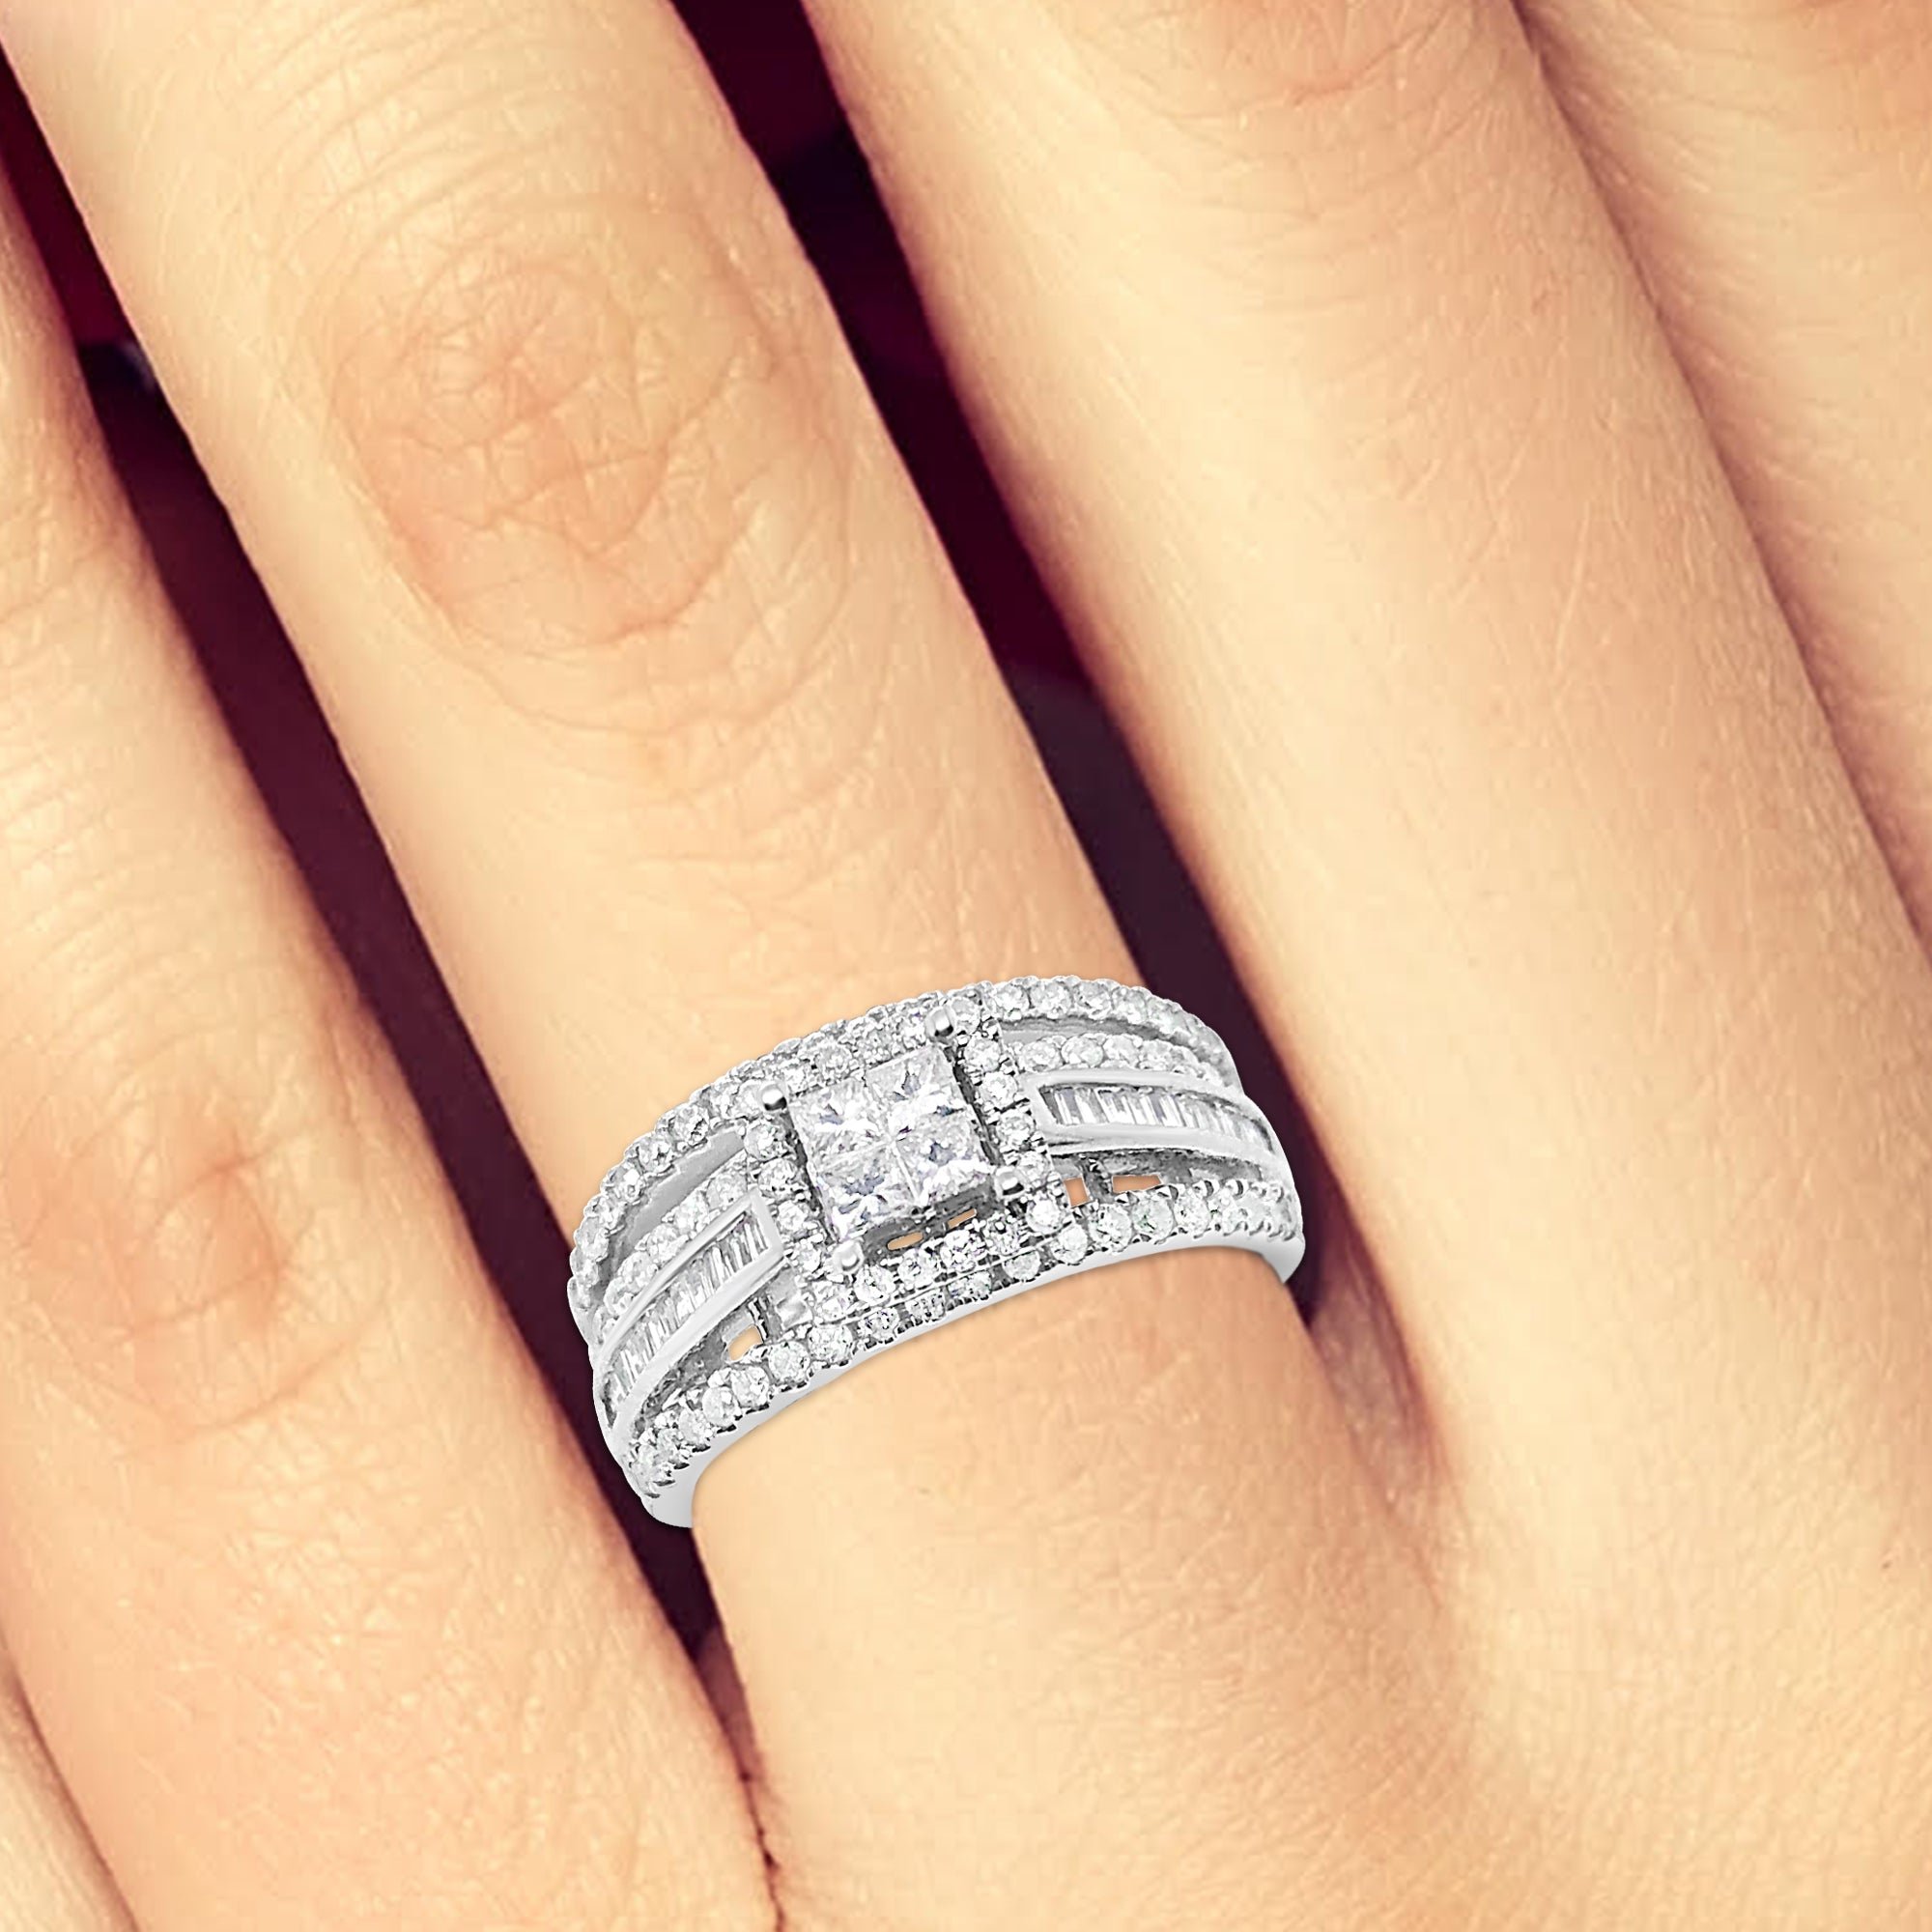 Diamond Halo Engagement Ring .95 CTW Princess w/ Round Cut & Baguettes 14K White Gold